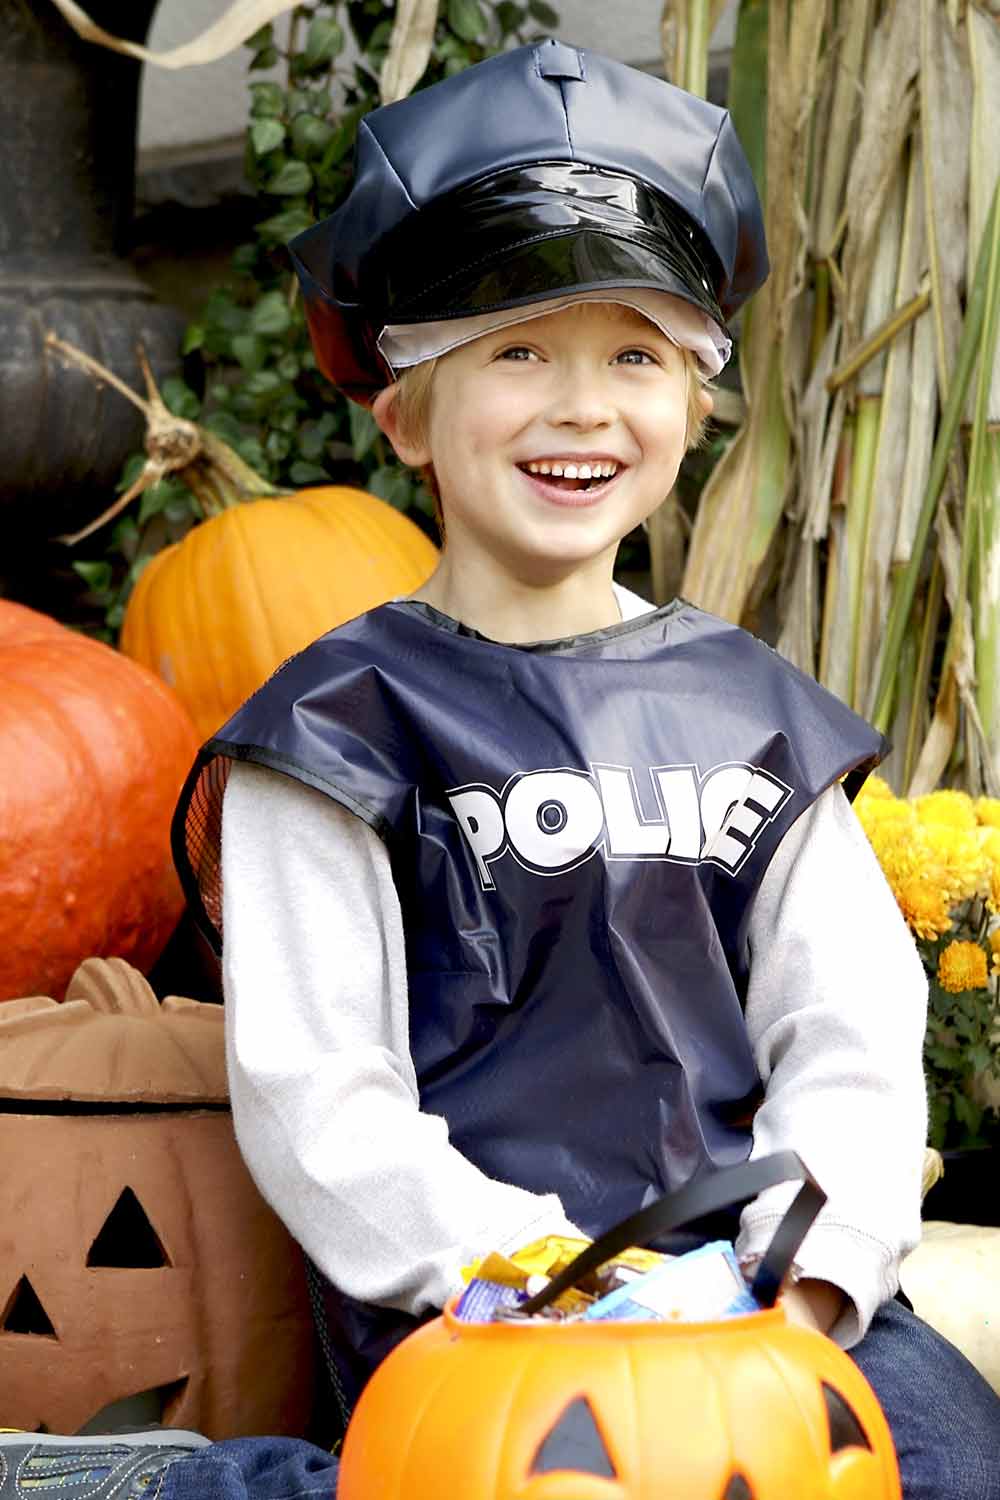 Police Man Halloween Costume for Boy